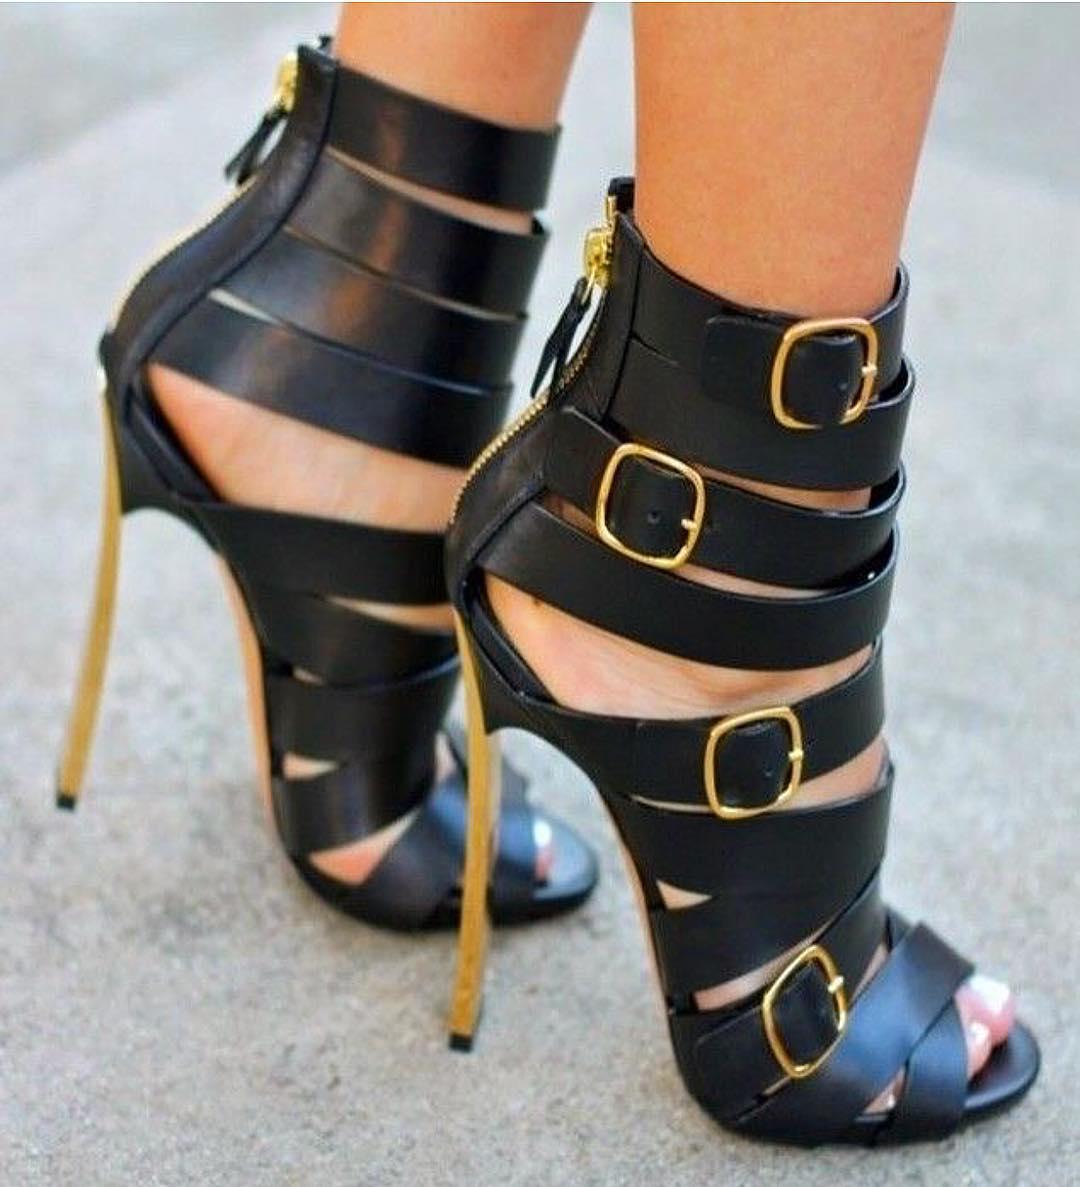 stylish girl with high heels